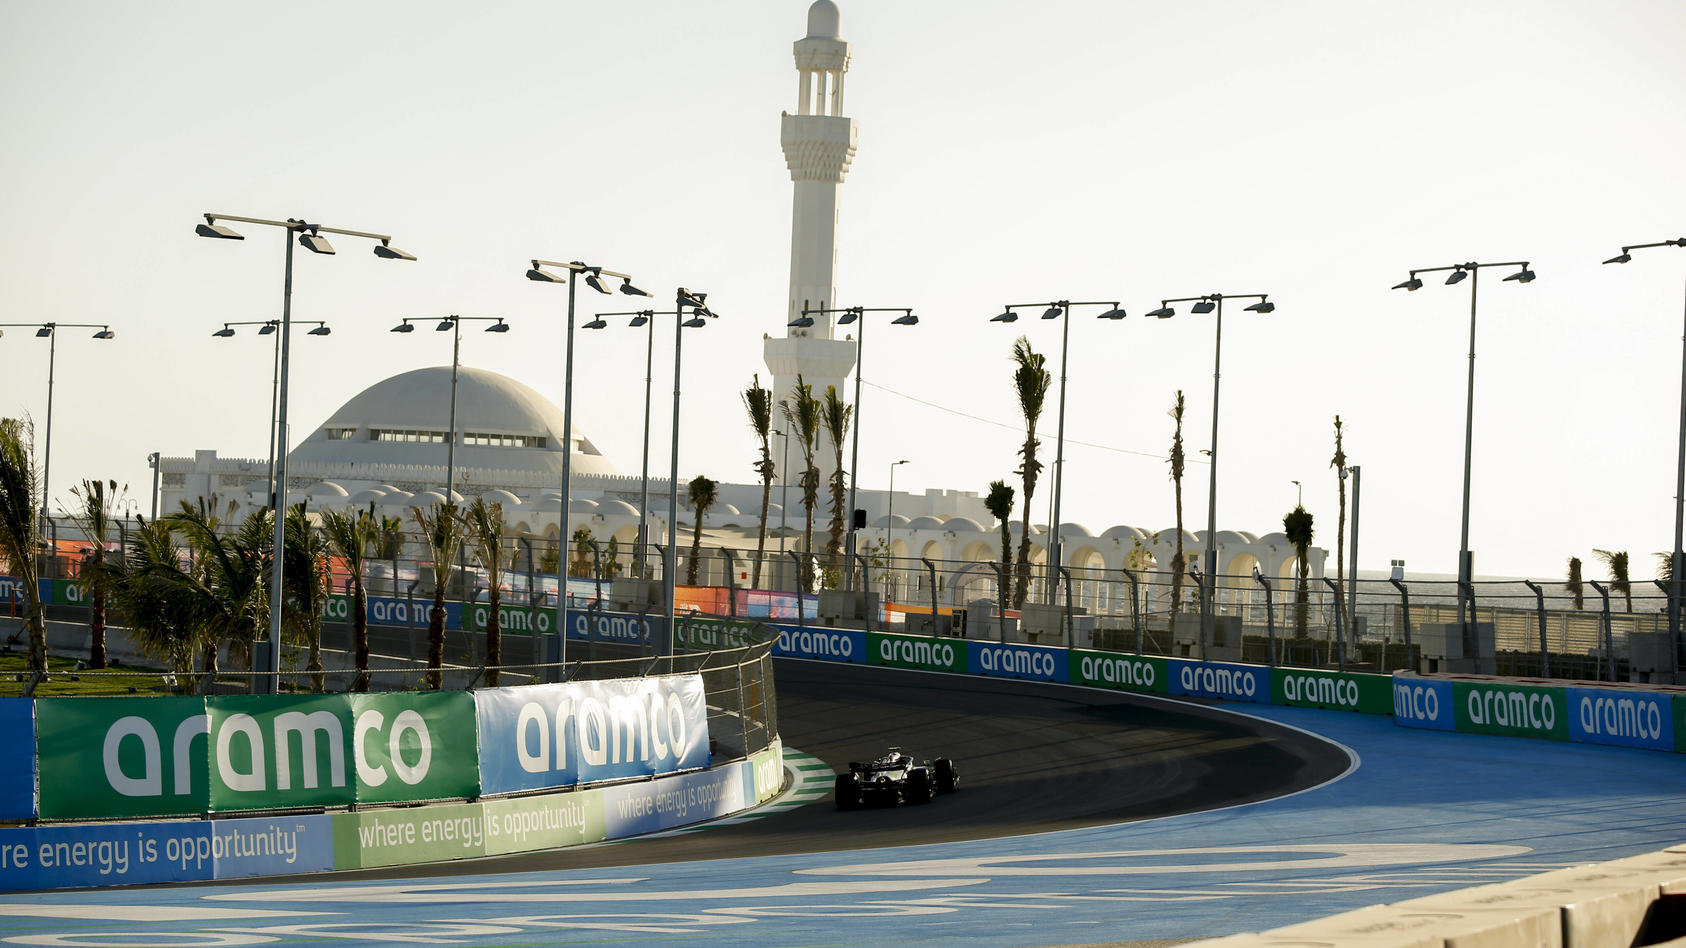  44 Lewis Hamilton GBR, Mercedes-AMG Petronas F1 Team, F1 Grand Prix of Saudi Arabia at Jeddah Corniche Circuit on March 25, 2022 in Jeddah, Saudi Arabia. Photo by HOCH ZWEI Jeddah Saudi Arabia *** 44 Lewis Hamilton GBR, Mercedes AMG Petronas F1 Team